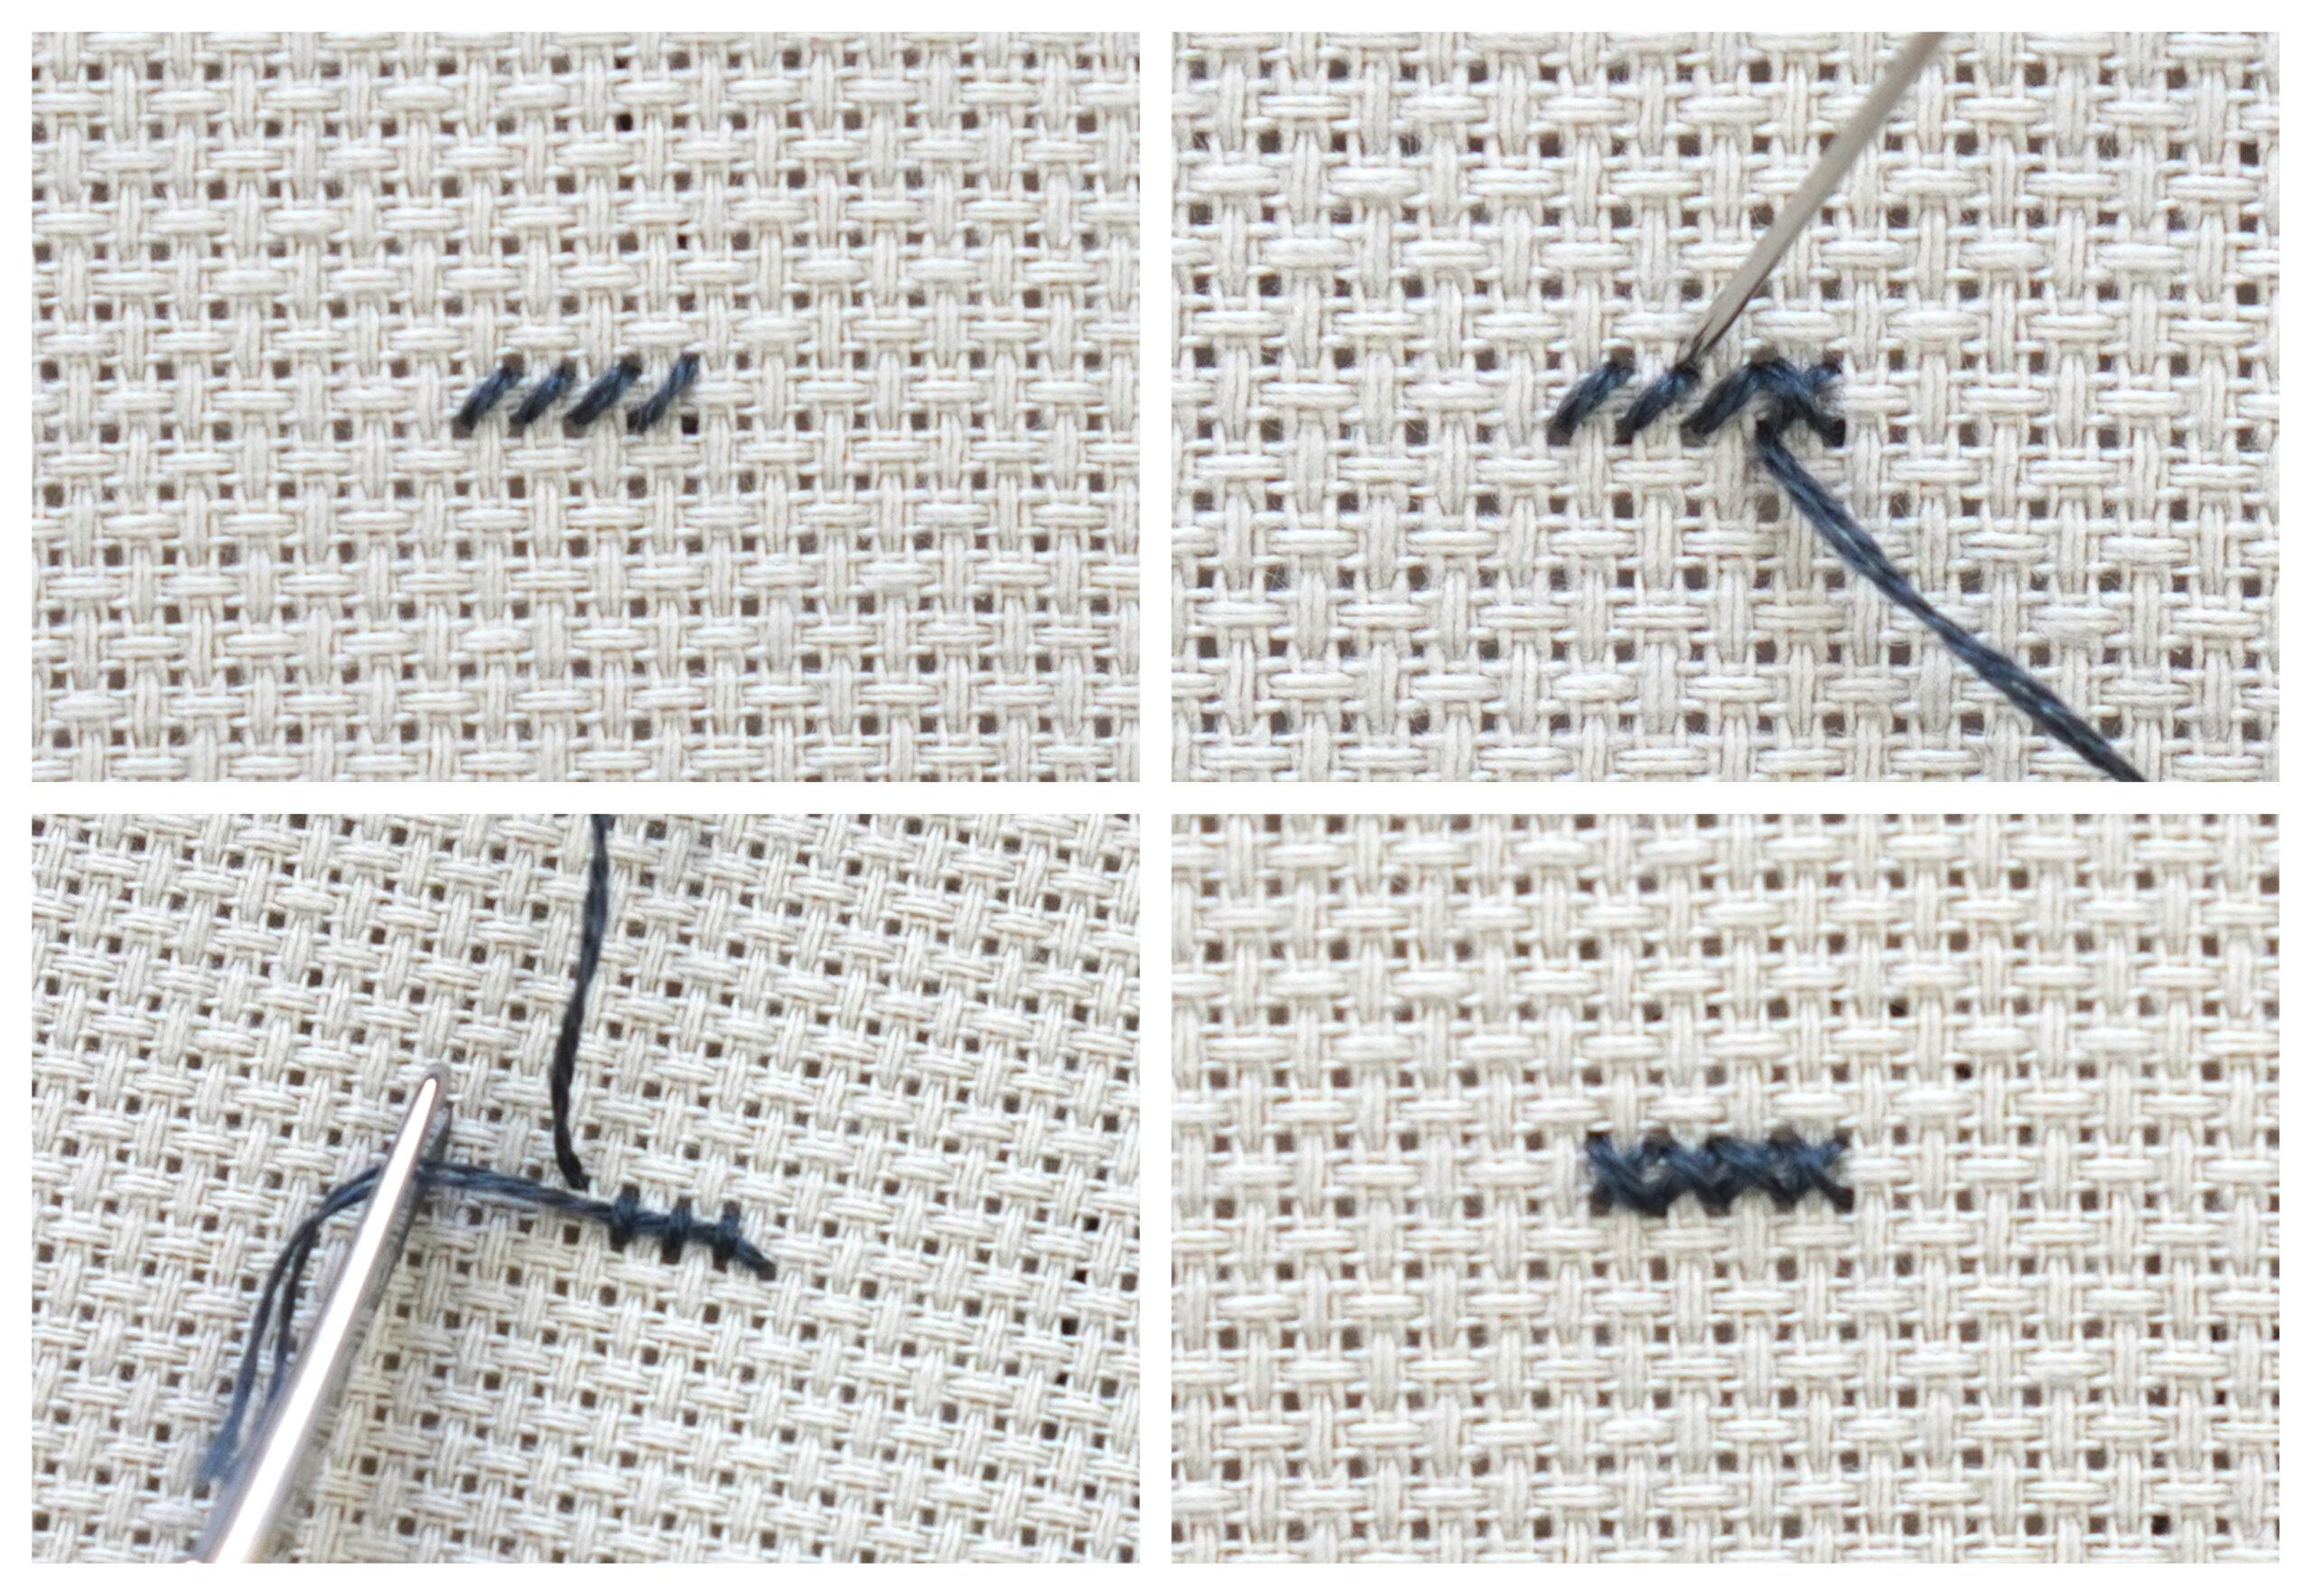 A beginner's guide to cross stitch  Cross stitch beginner, Cross stitch,  Simple cross stitch